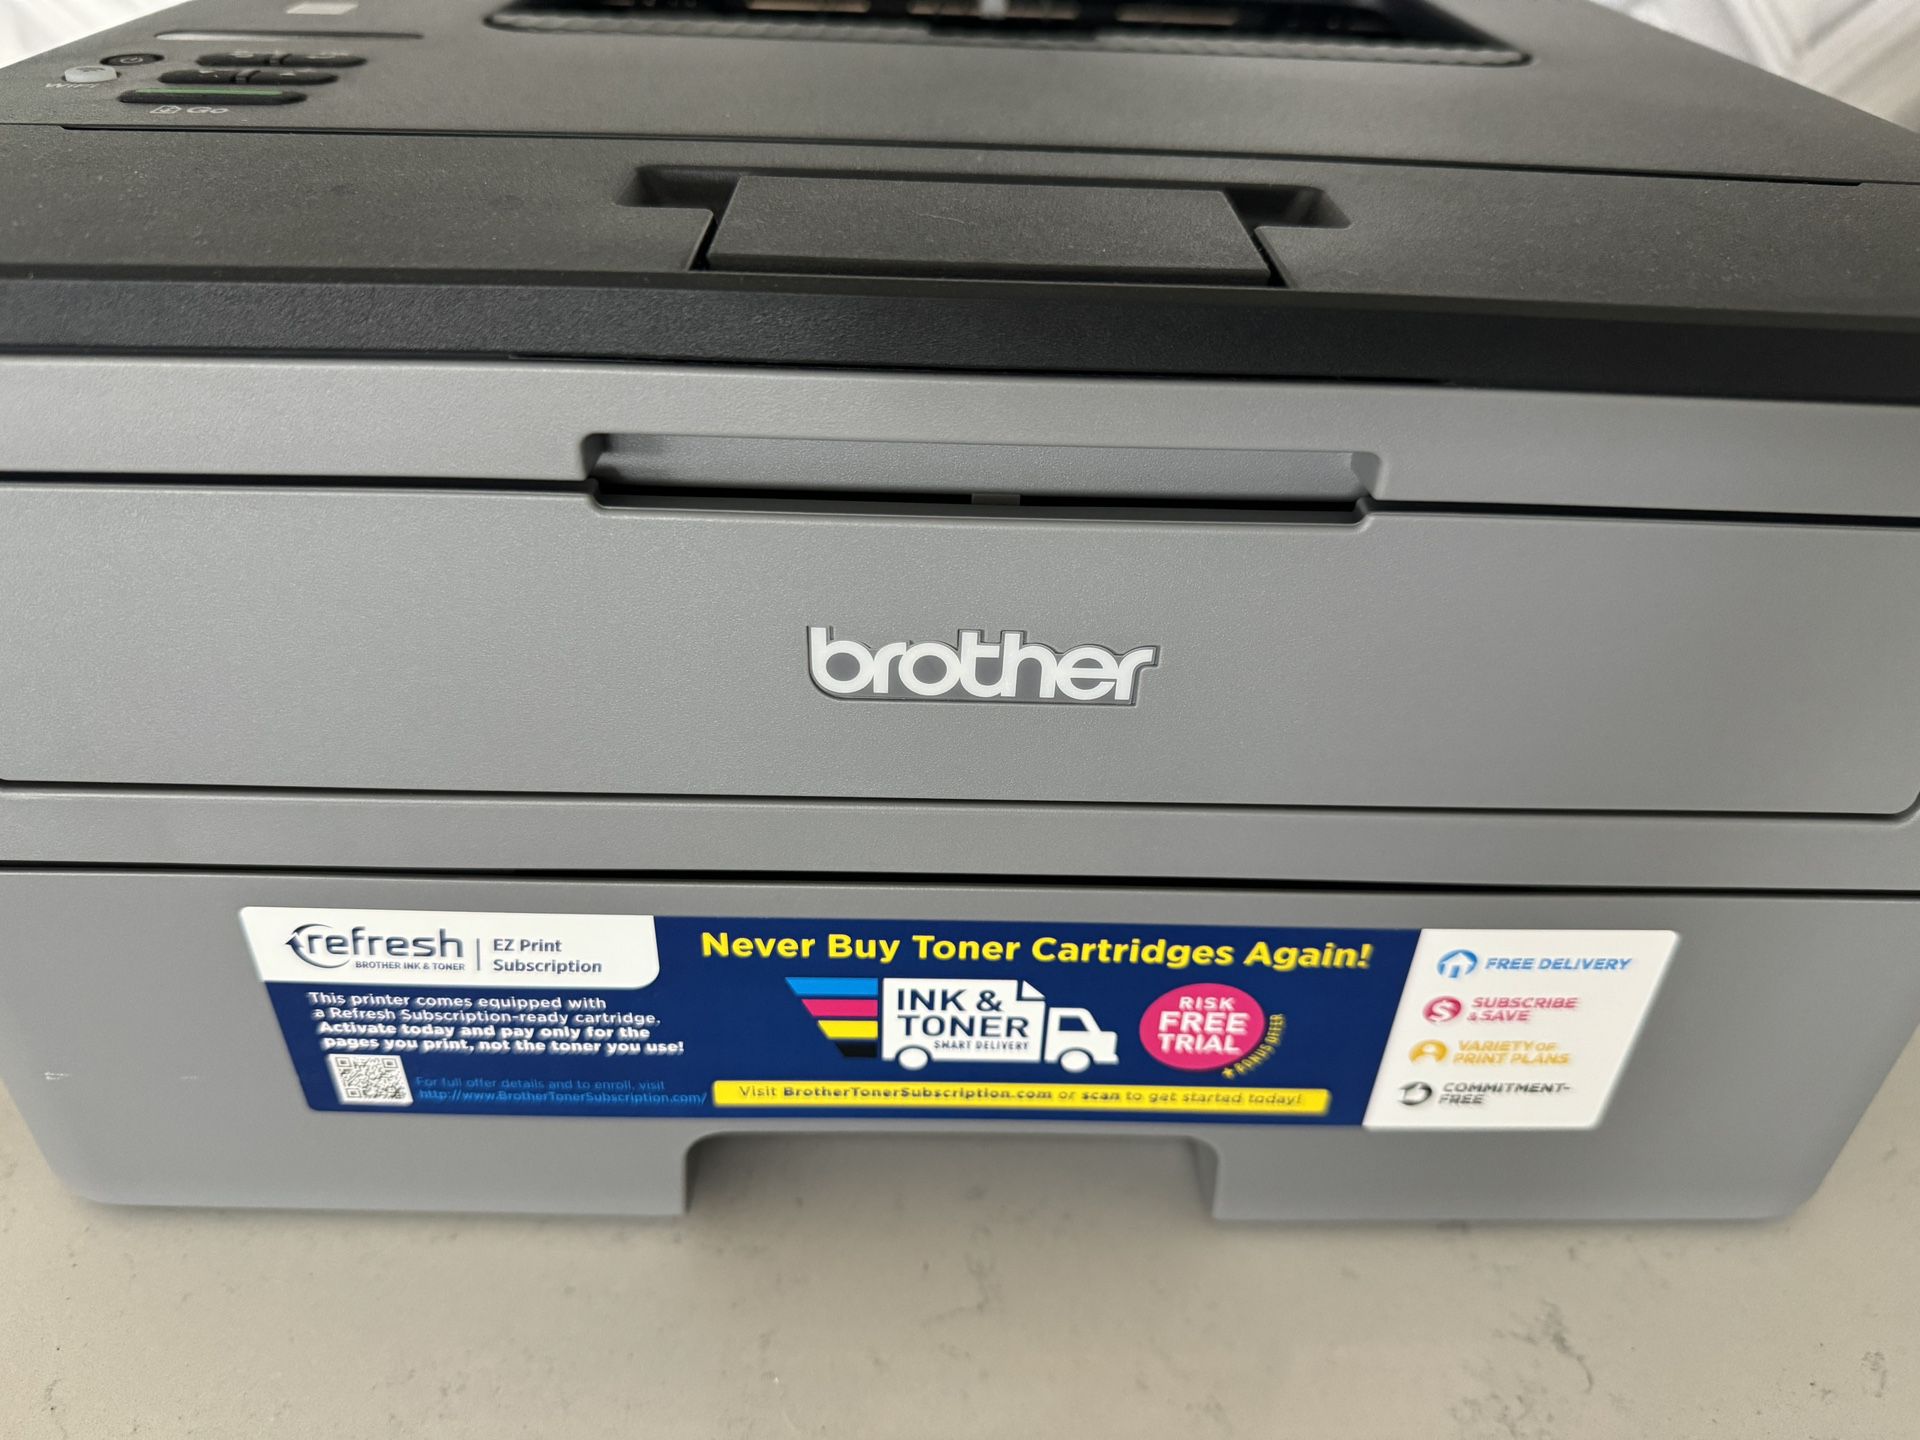 Brother Computer Printer. New 